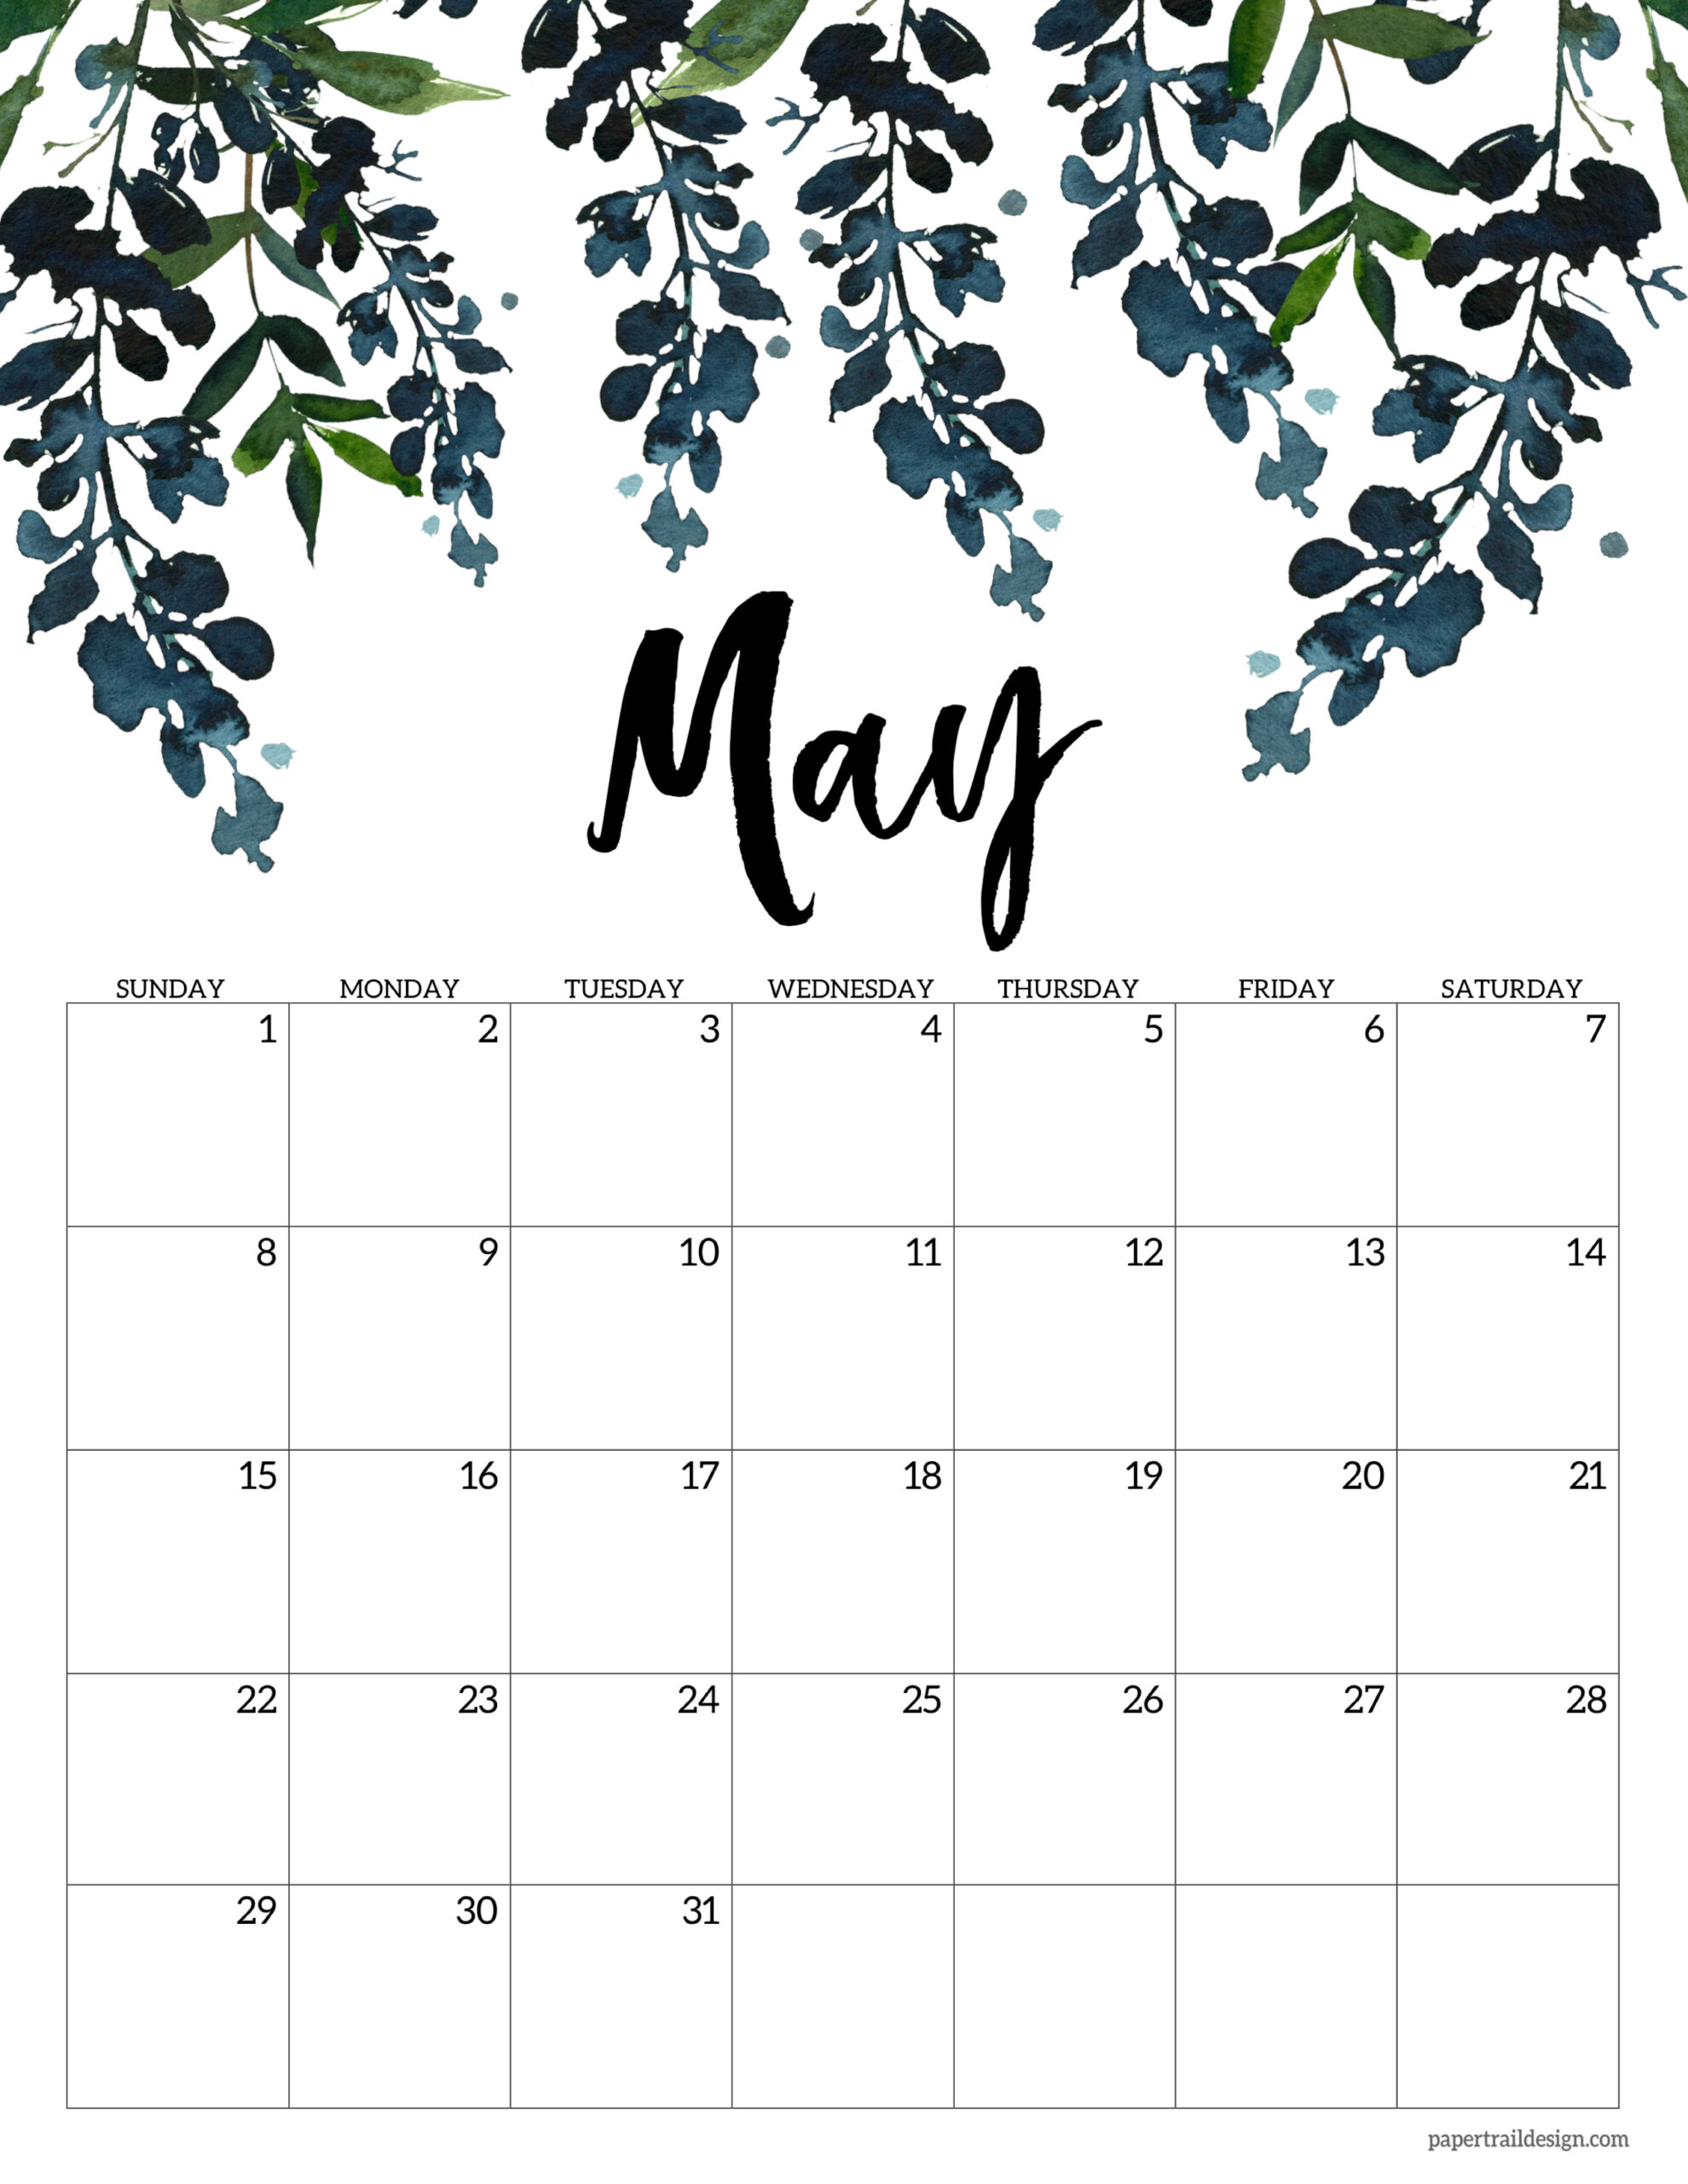 May 2022 Calendar Template Free 2022 Calendar Printable - Floral - Paper Trail Design